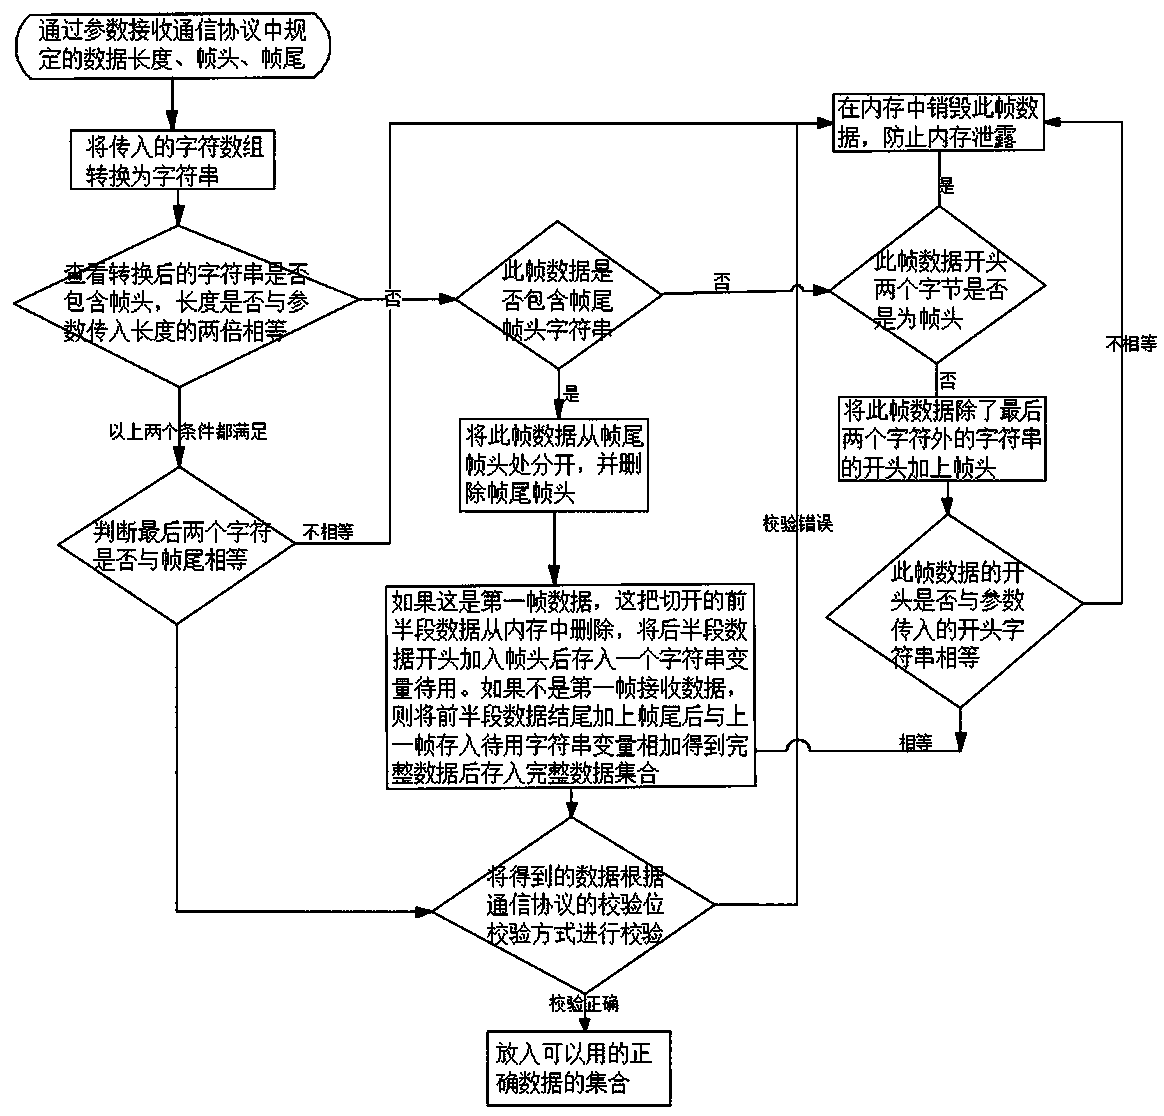 A serial port data processing method of unity3d platform